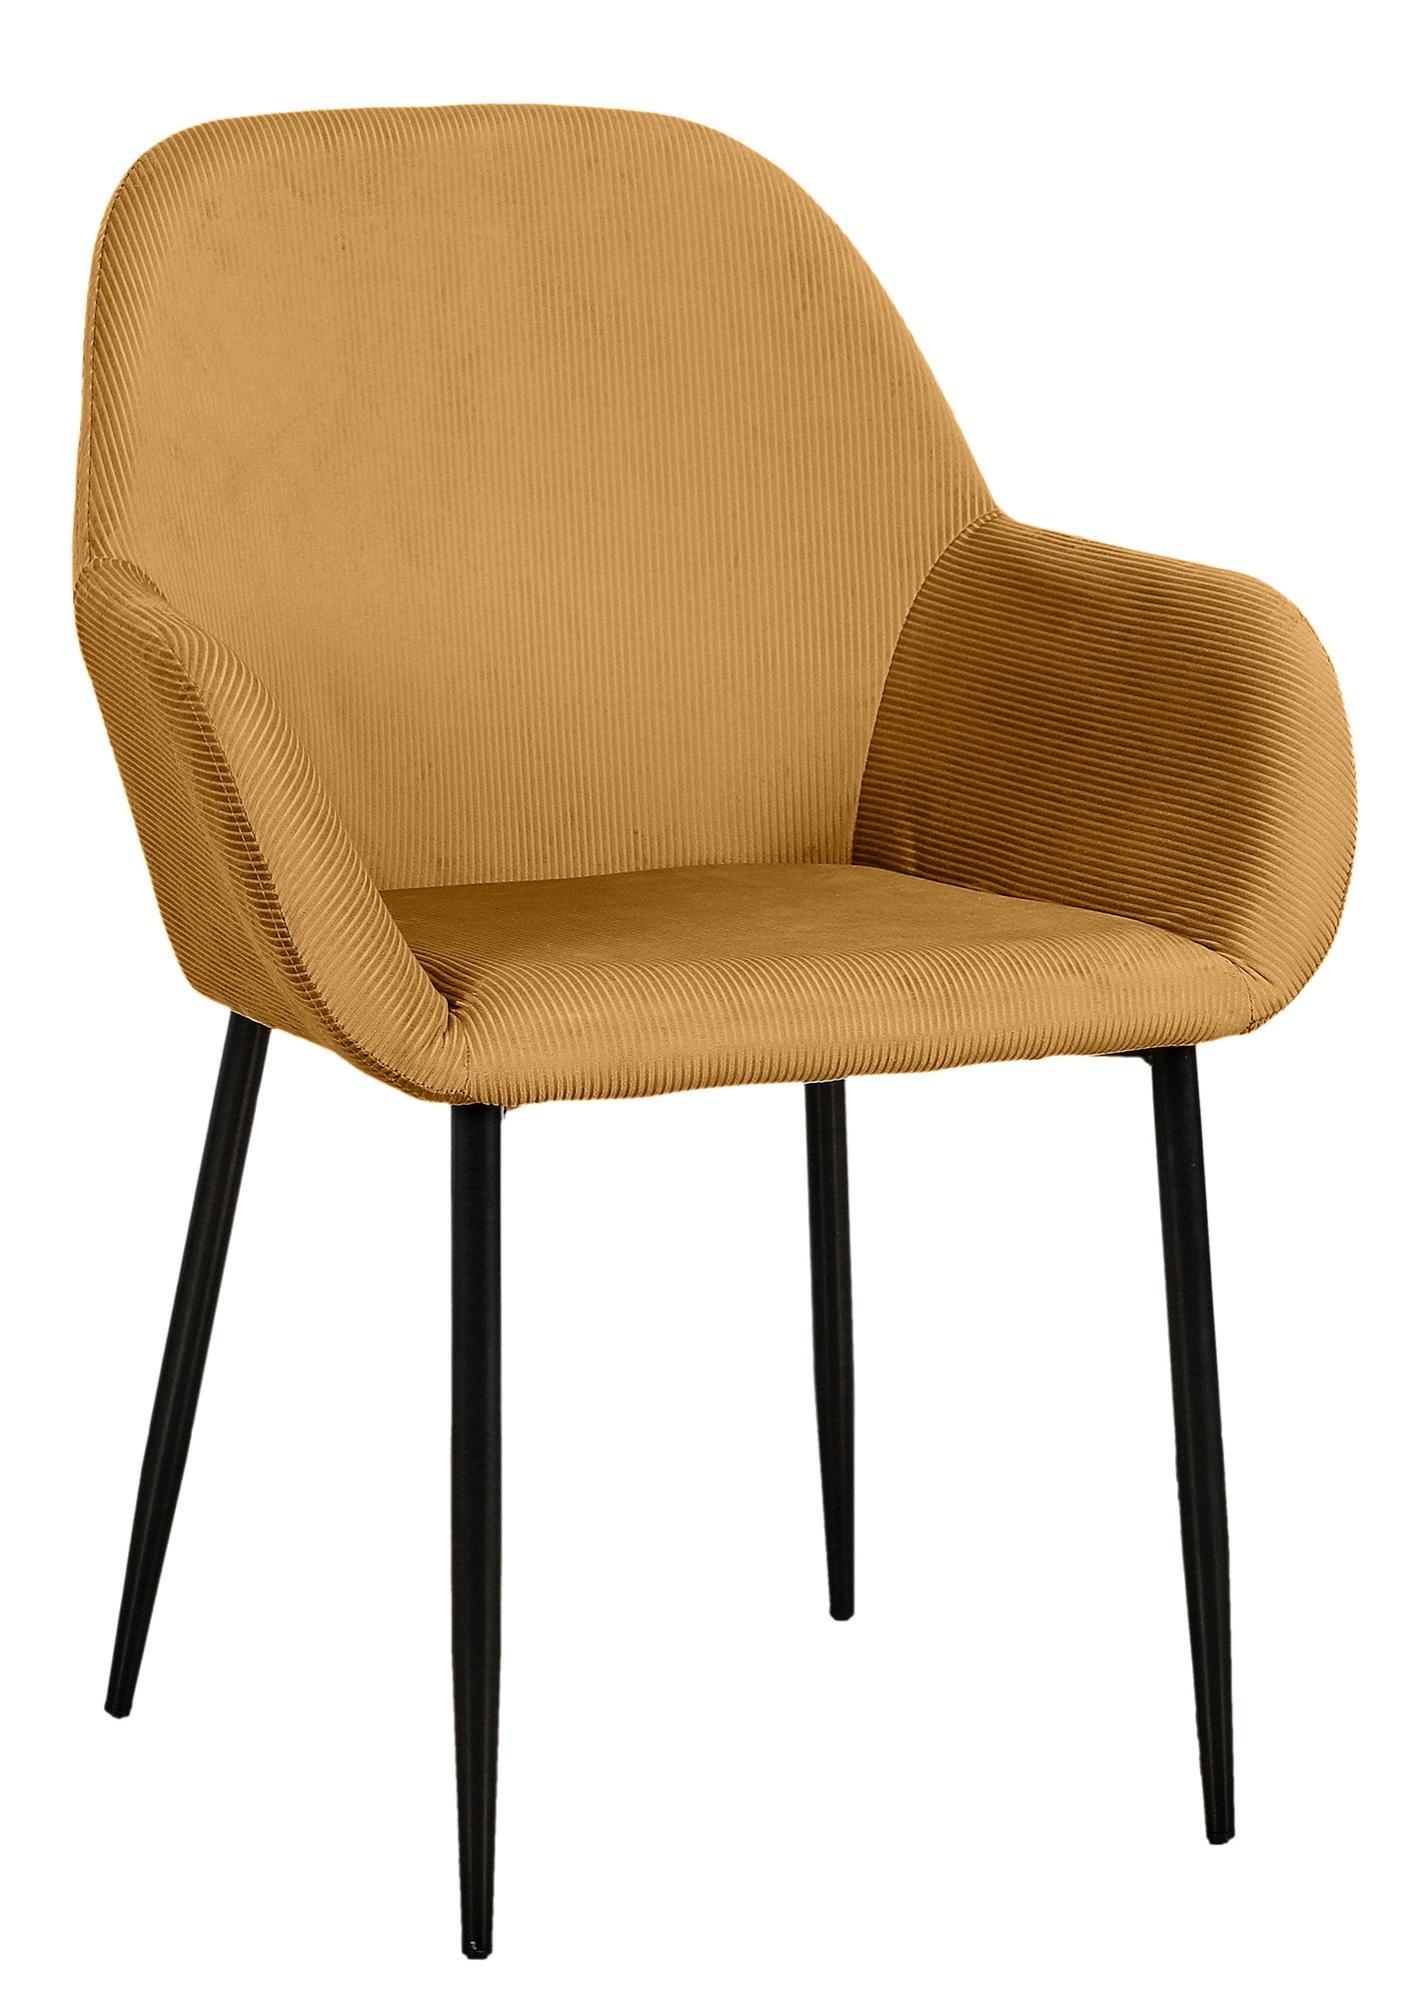 Set de 2 sillas de comedor giulia de madera color marrón de 85x55,7x59cm